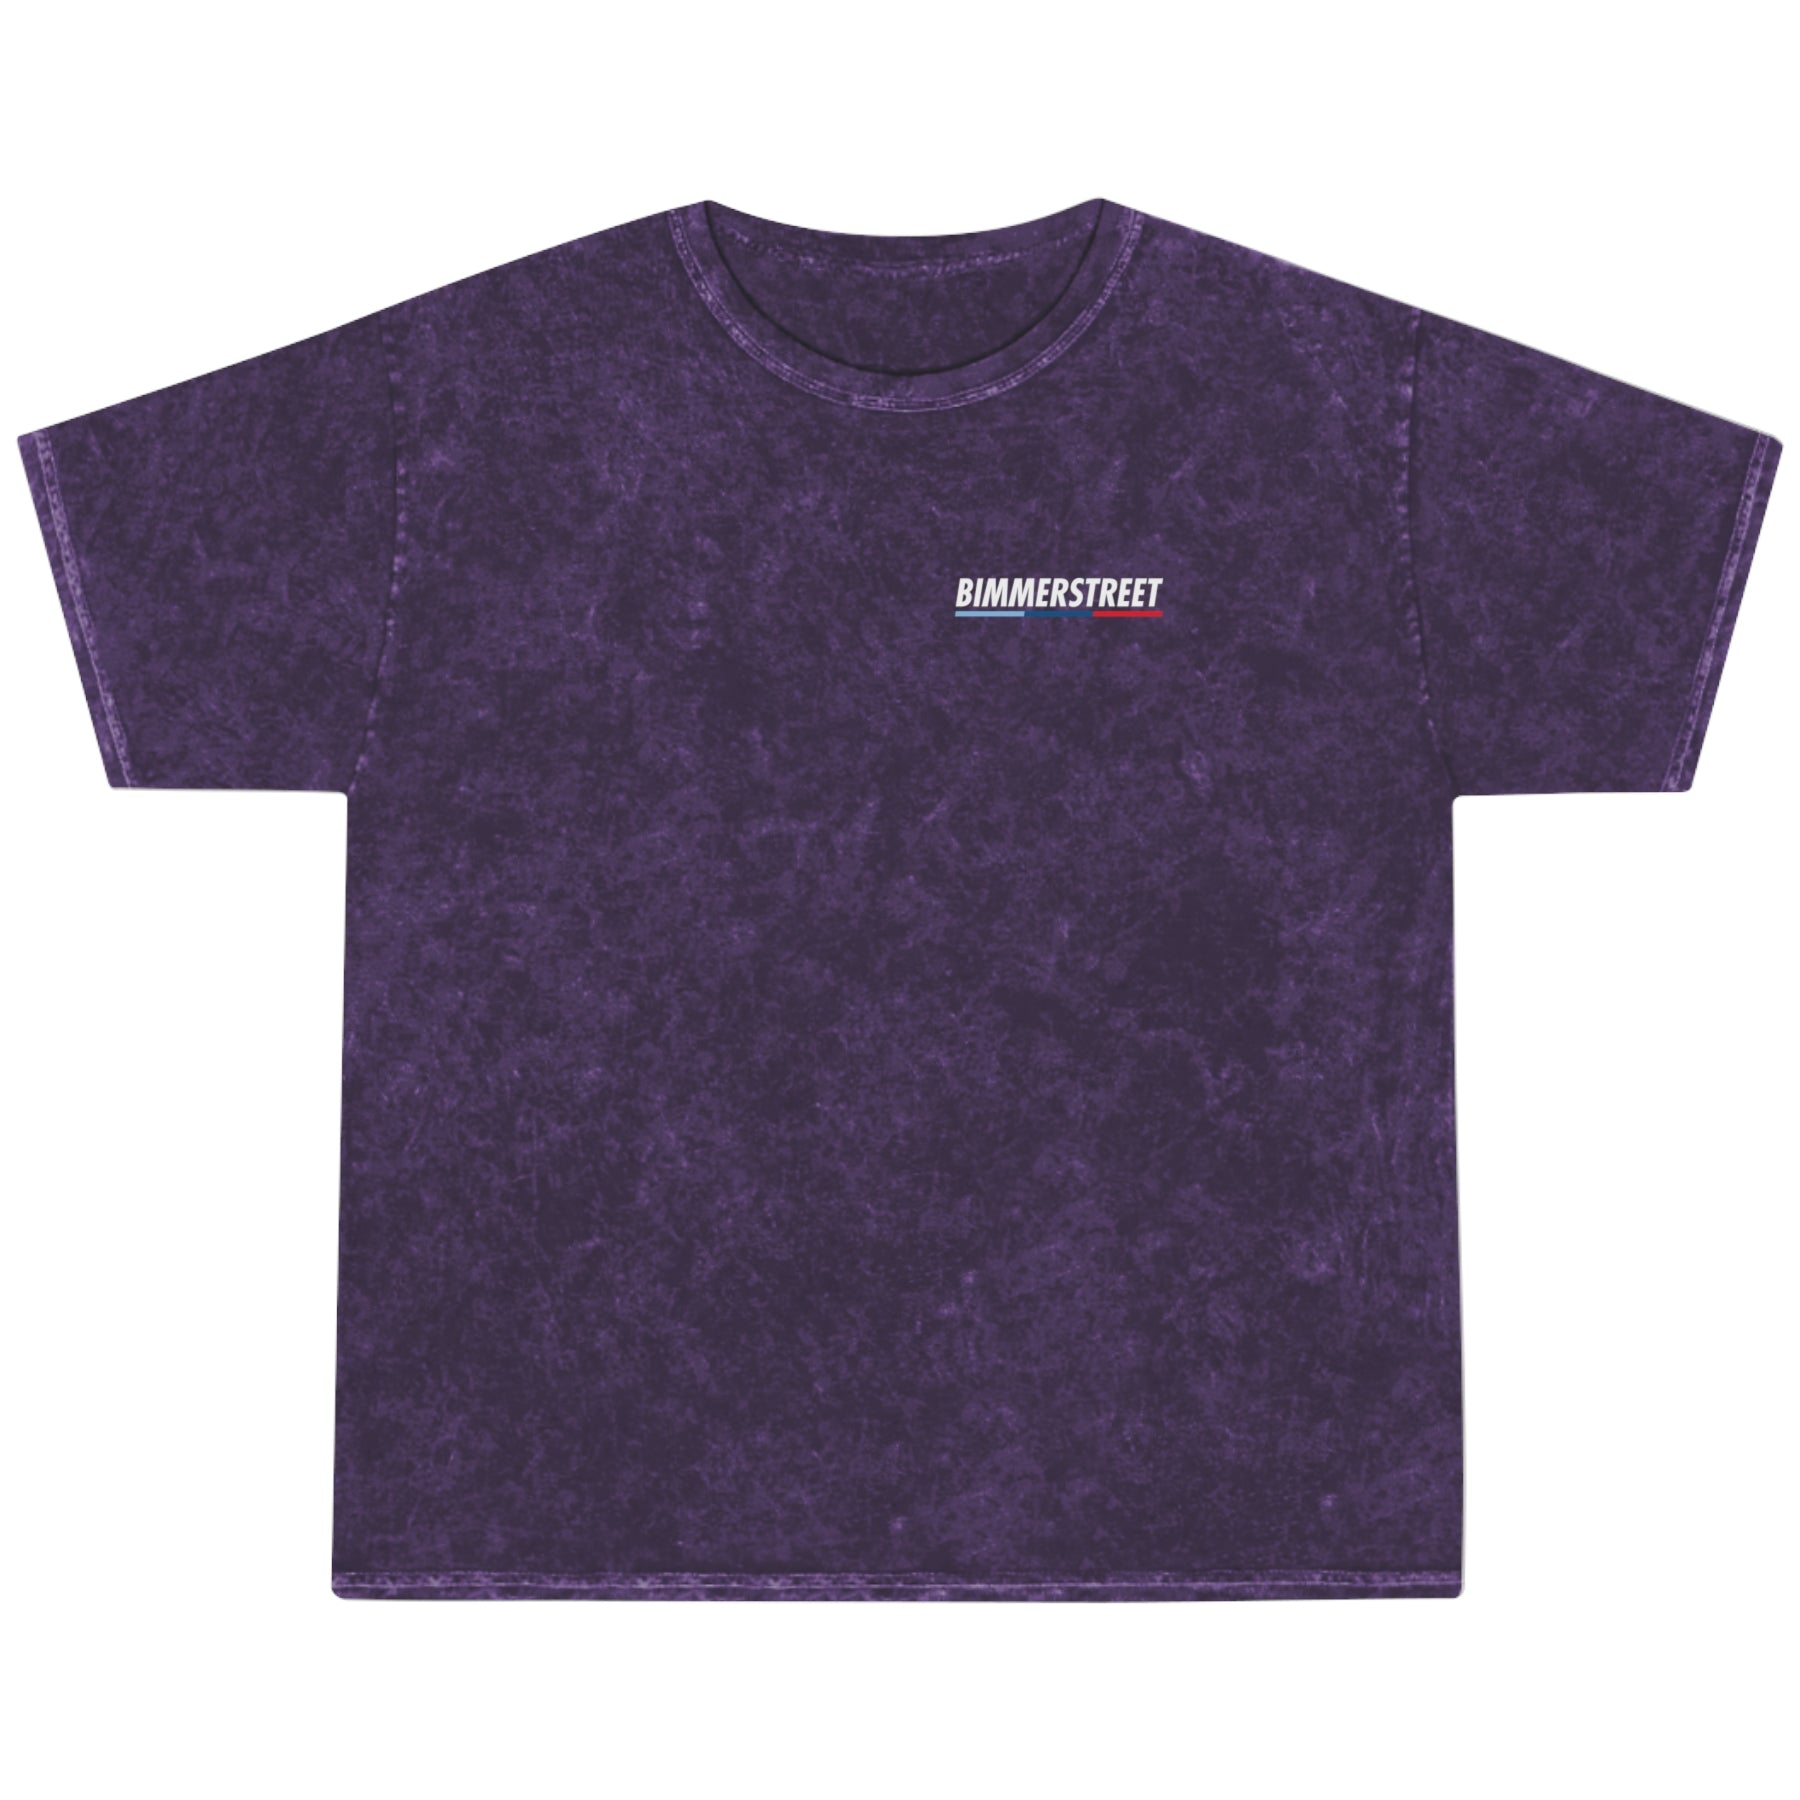 Mineral Wash BimmerStreet T-Shirt